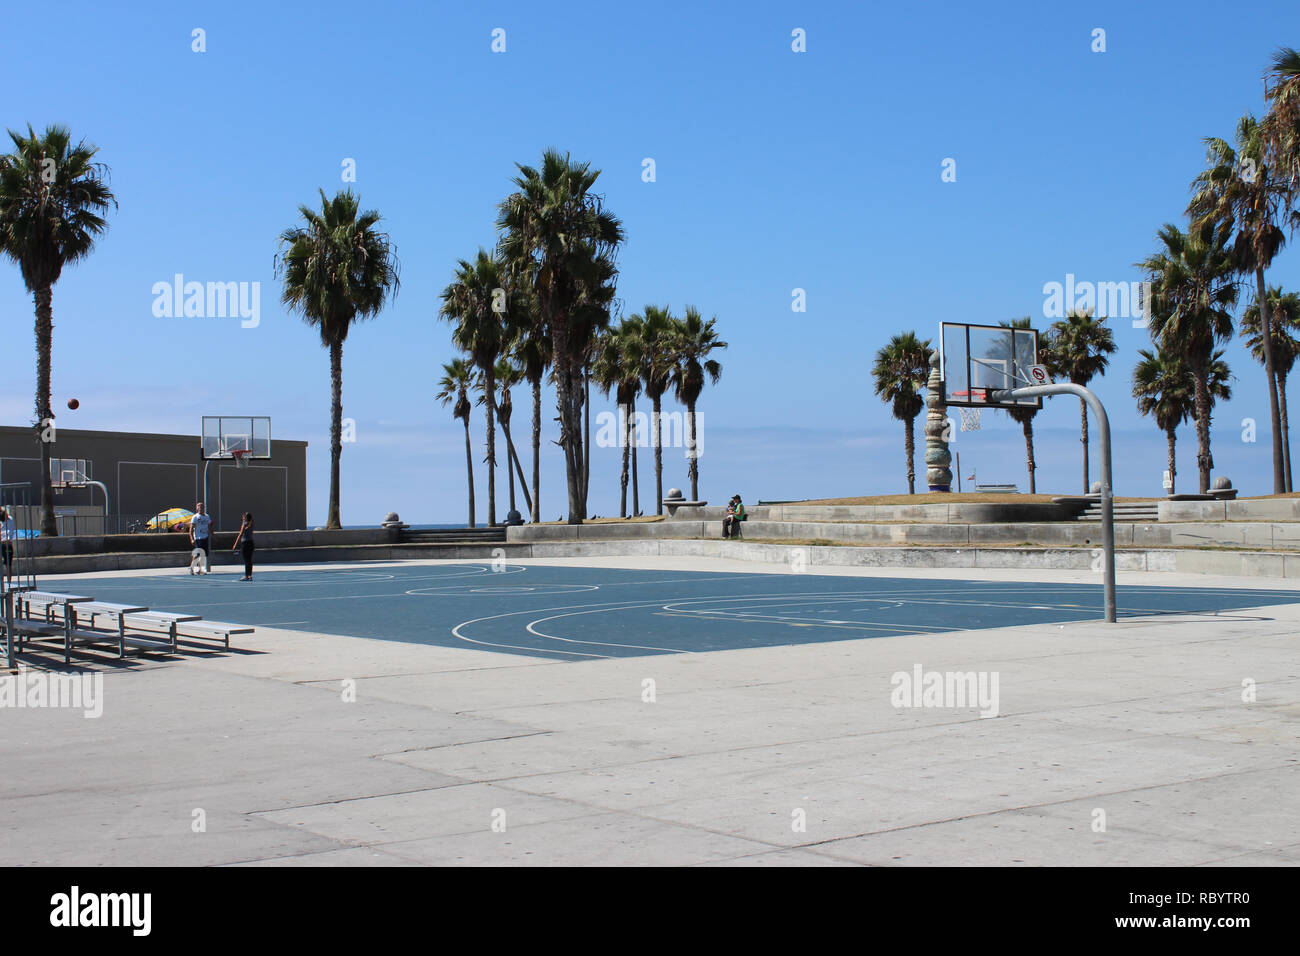 Basketball court on Venice beach, California Stock Photo - Alamy